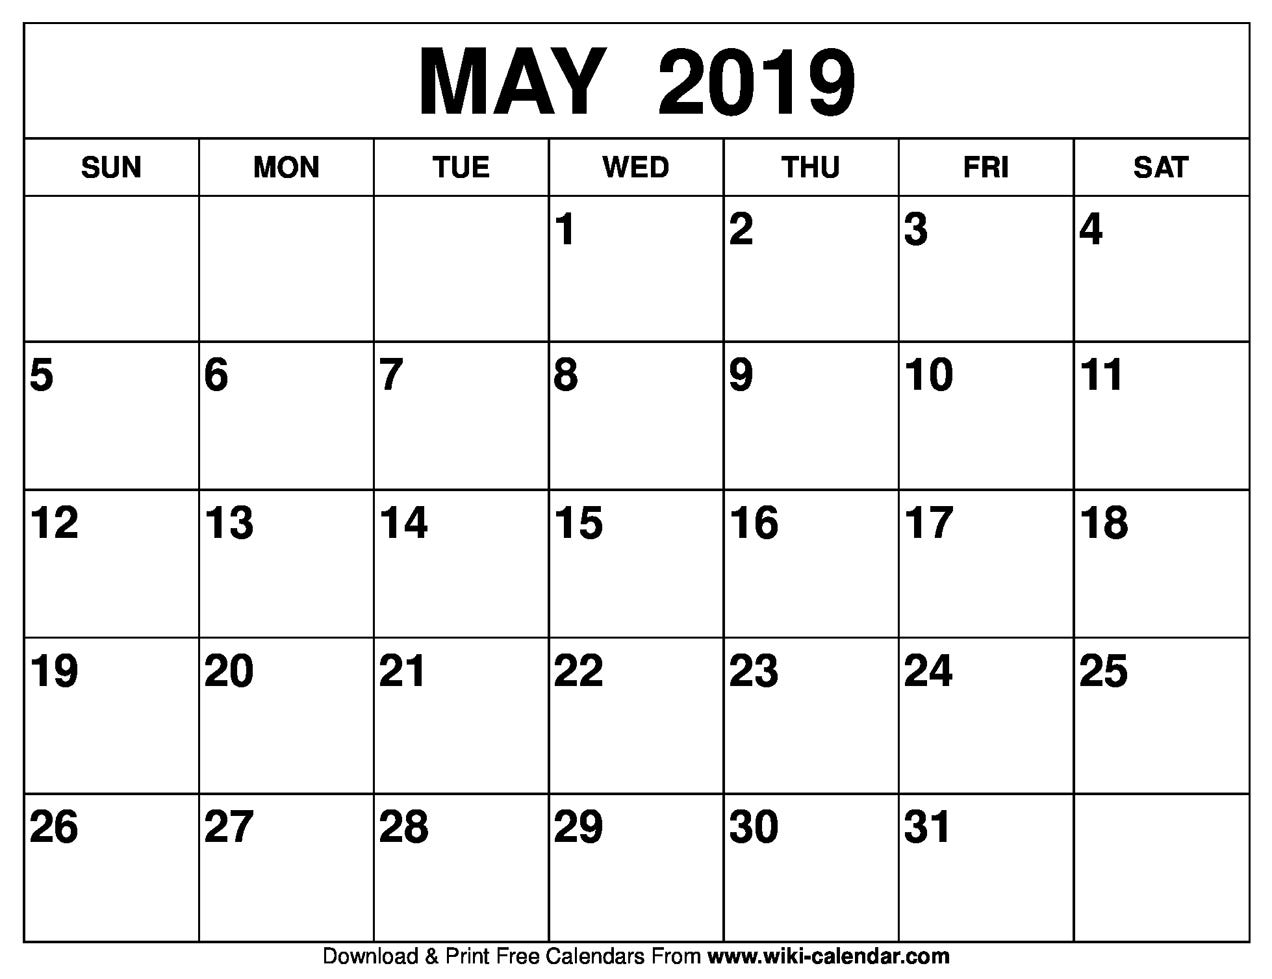 May 2019 Calendar - Sharon Gore - Medium